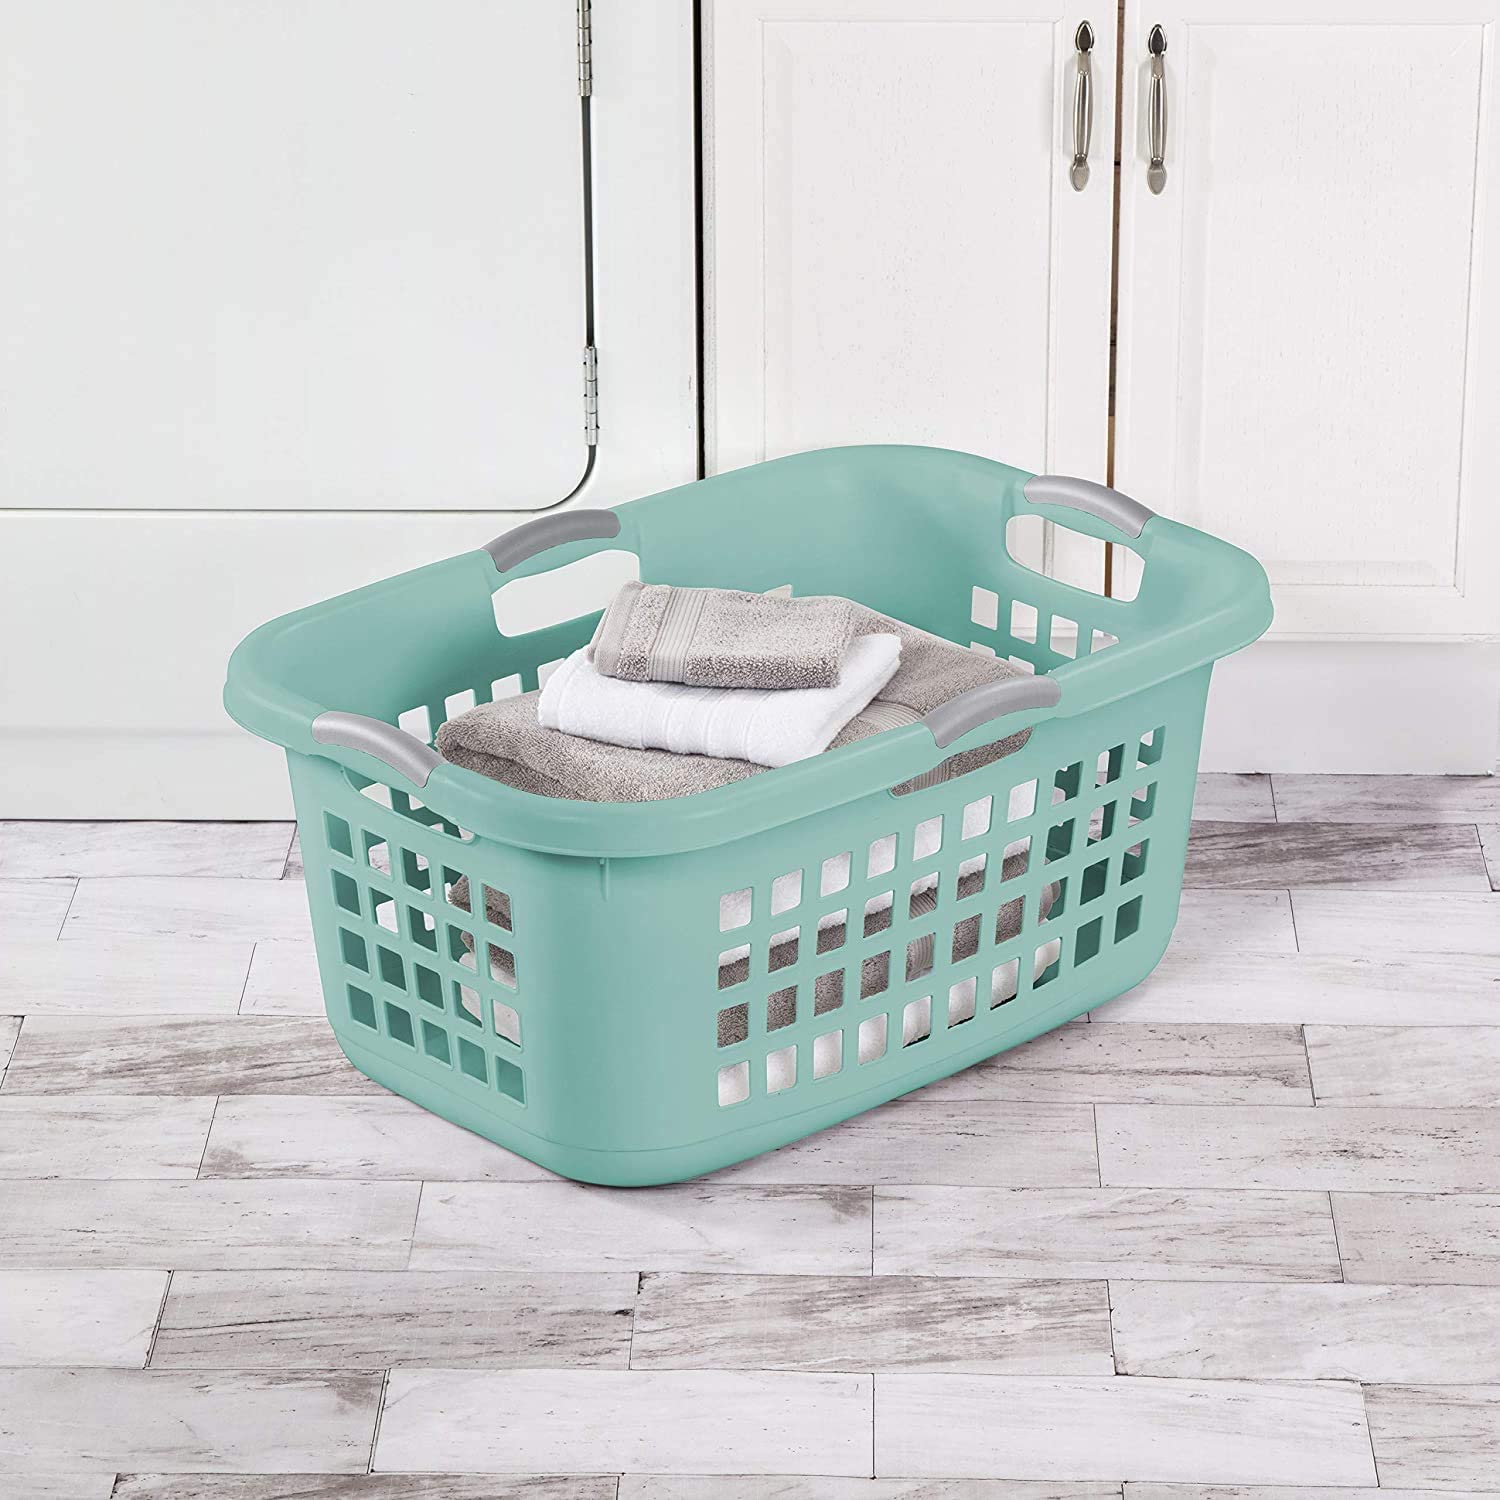 Sterilite Stacking Laundry Basket White Set of 6 